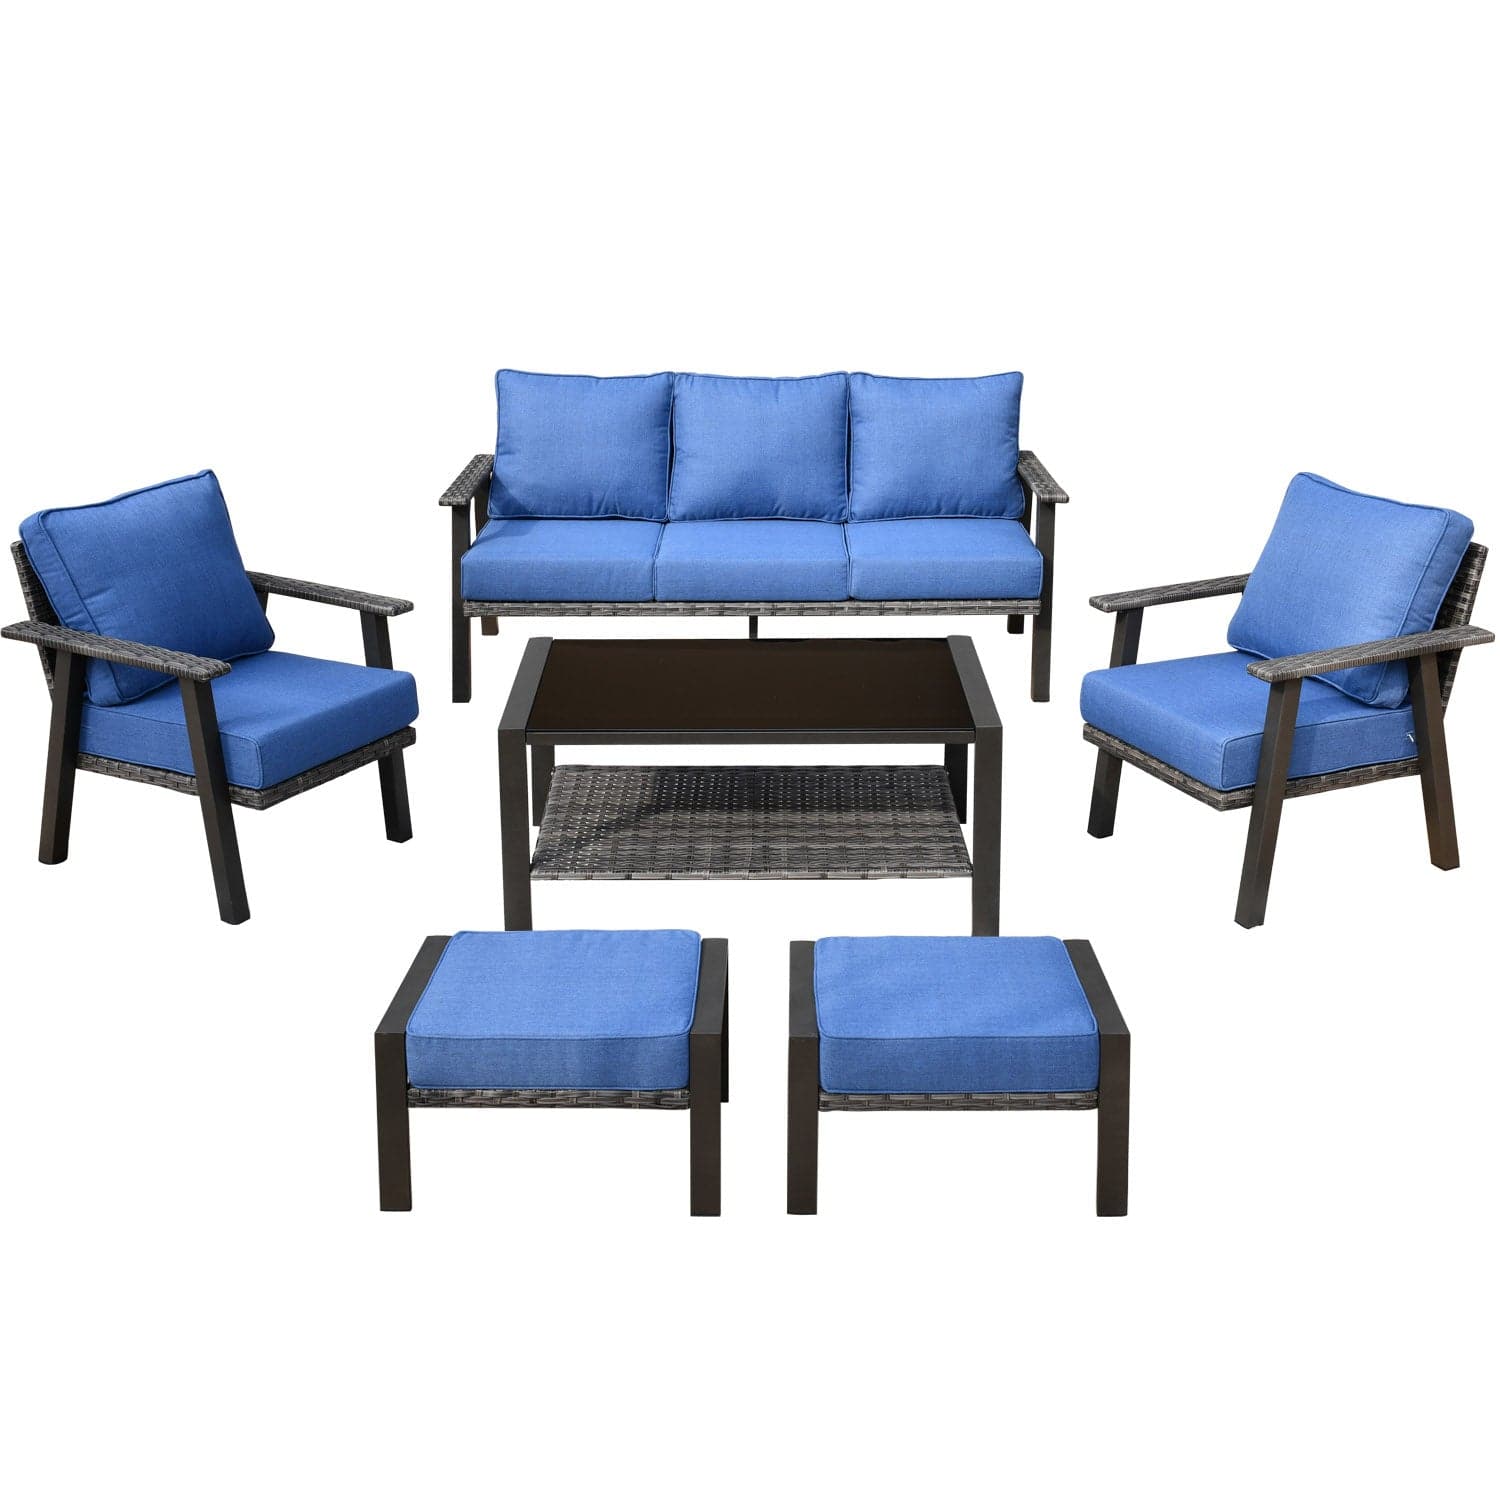 Ovios Patio Furniture Set 6 Piece With Table and Ottoman 5'' Cushion, Olefin Fabric